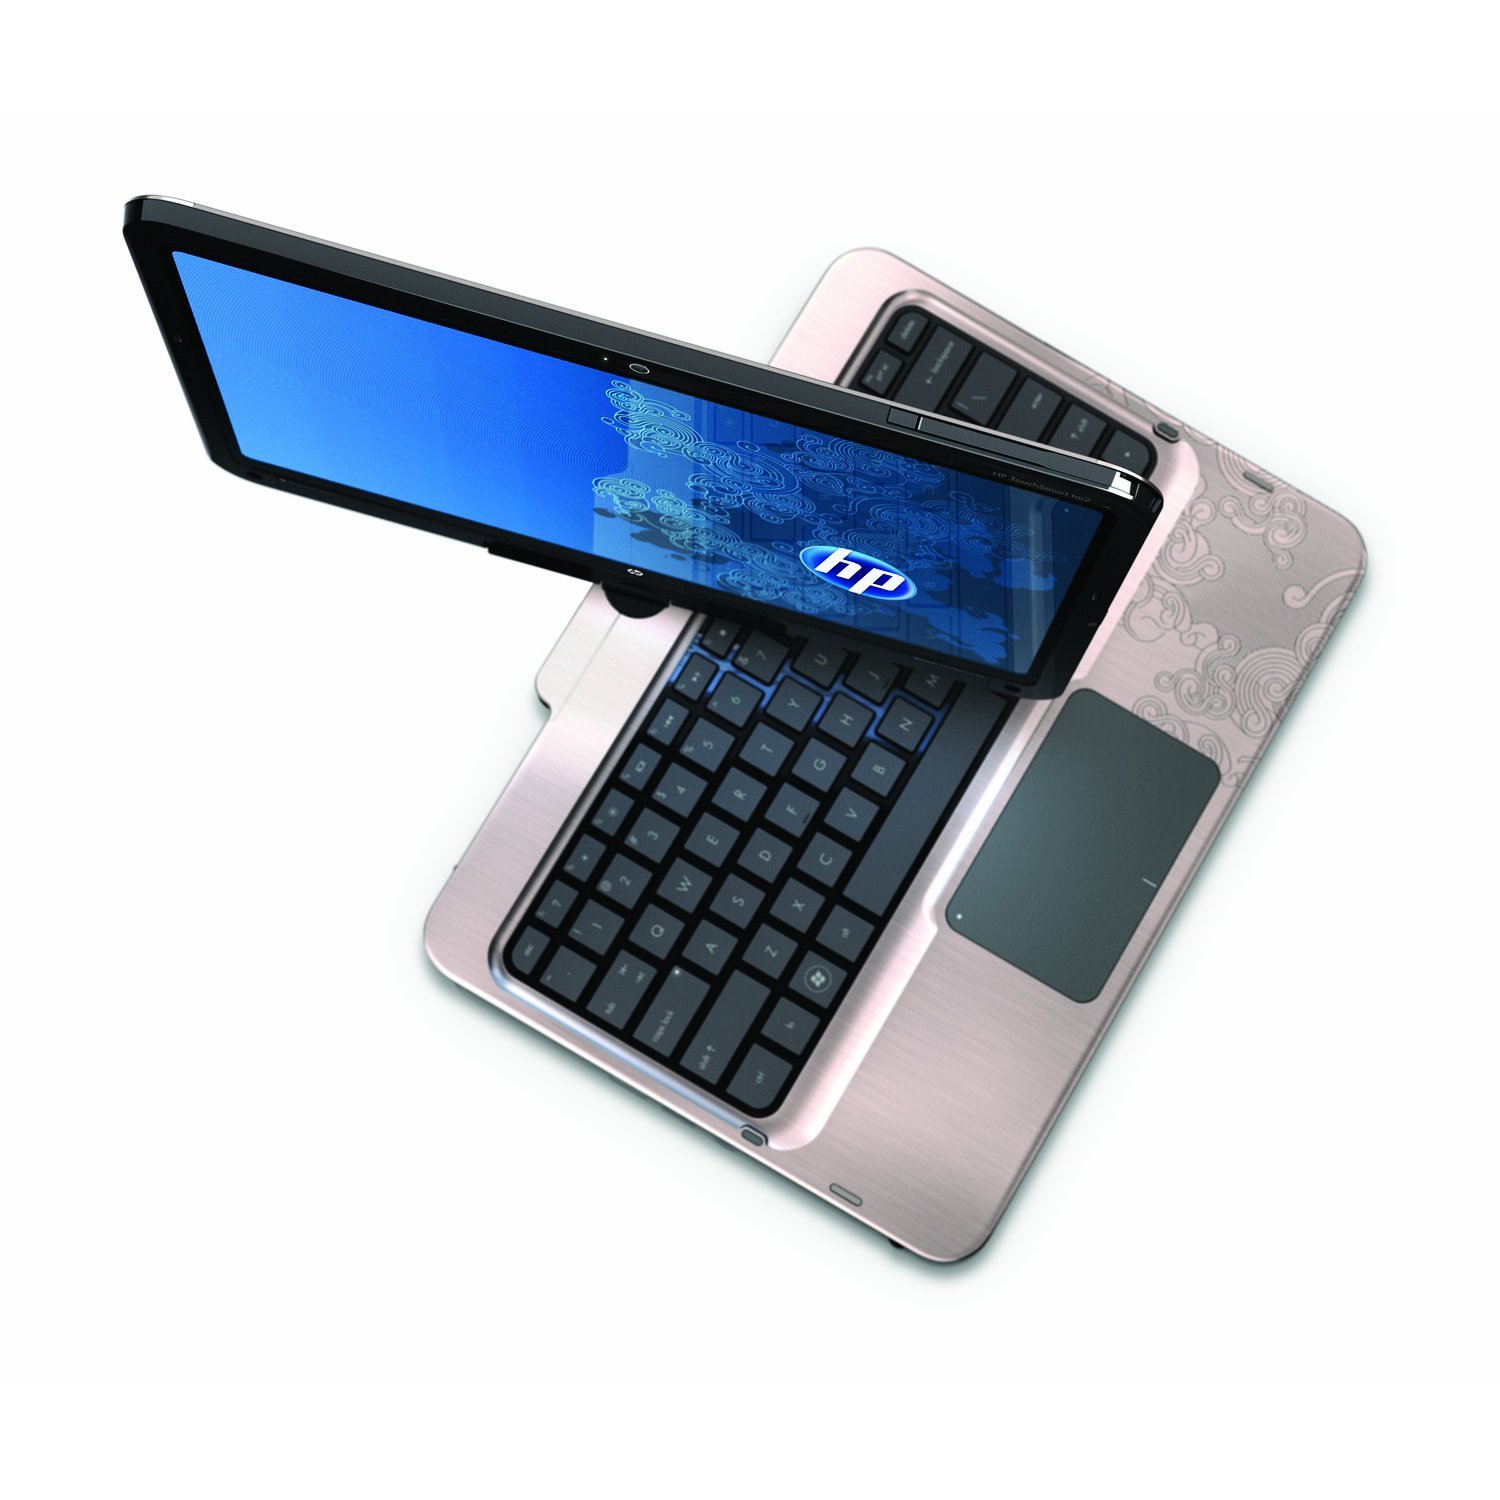 http://thetechjournal.com/wp-content/uploads/images/1107/1312084315-hp-touchsmart-tm21070us-121inch-riptide-argento-laptop--4.jpg